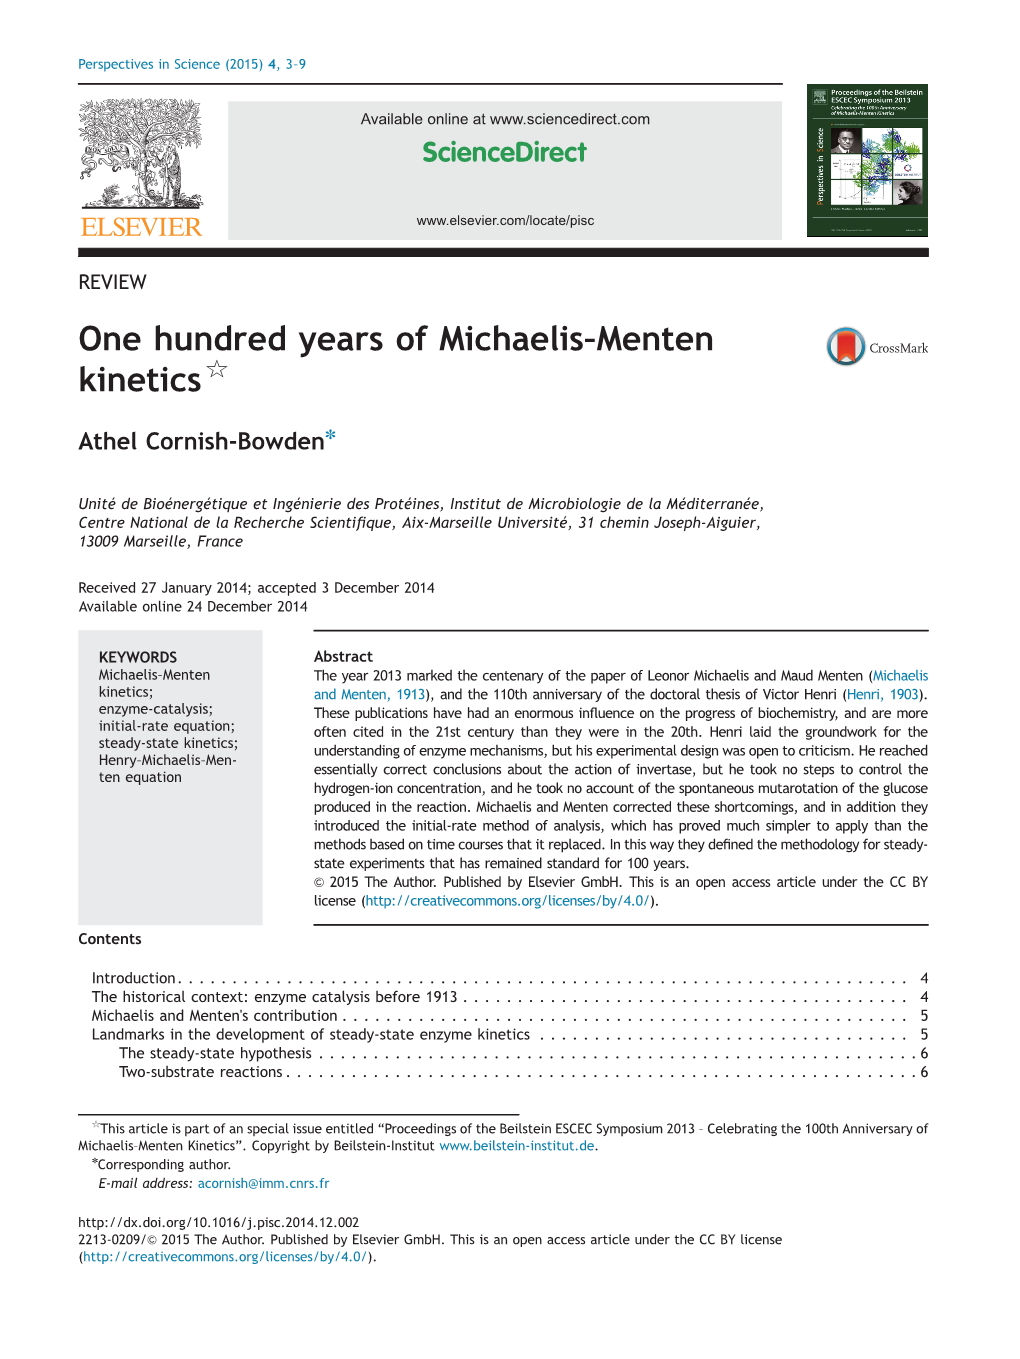 One Hundred Years of Michaelis–Menten Kinetics$